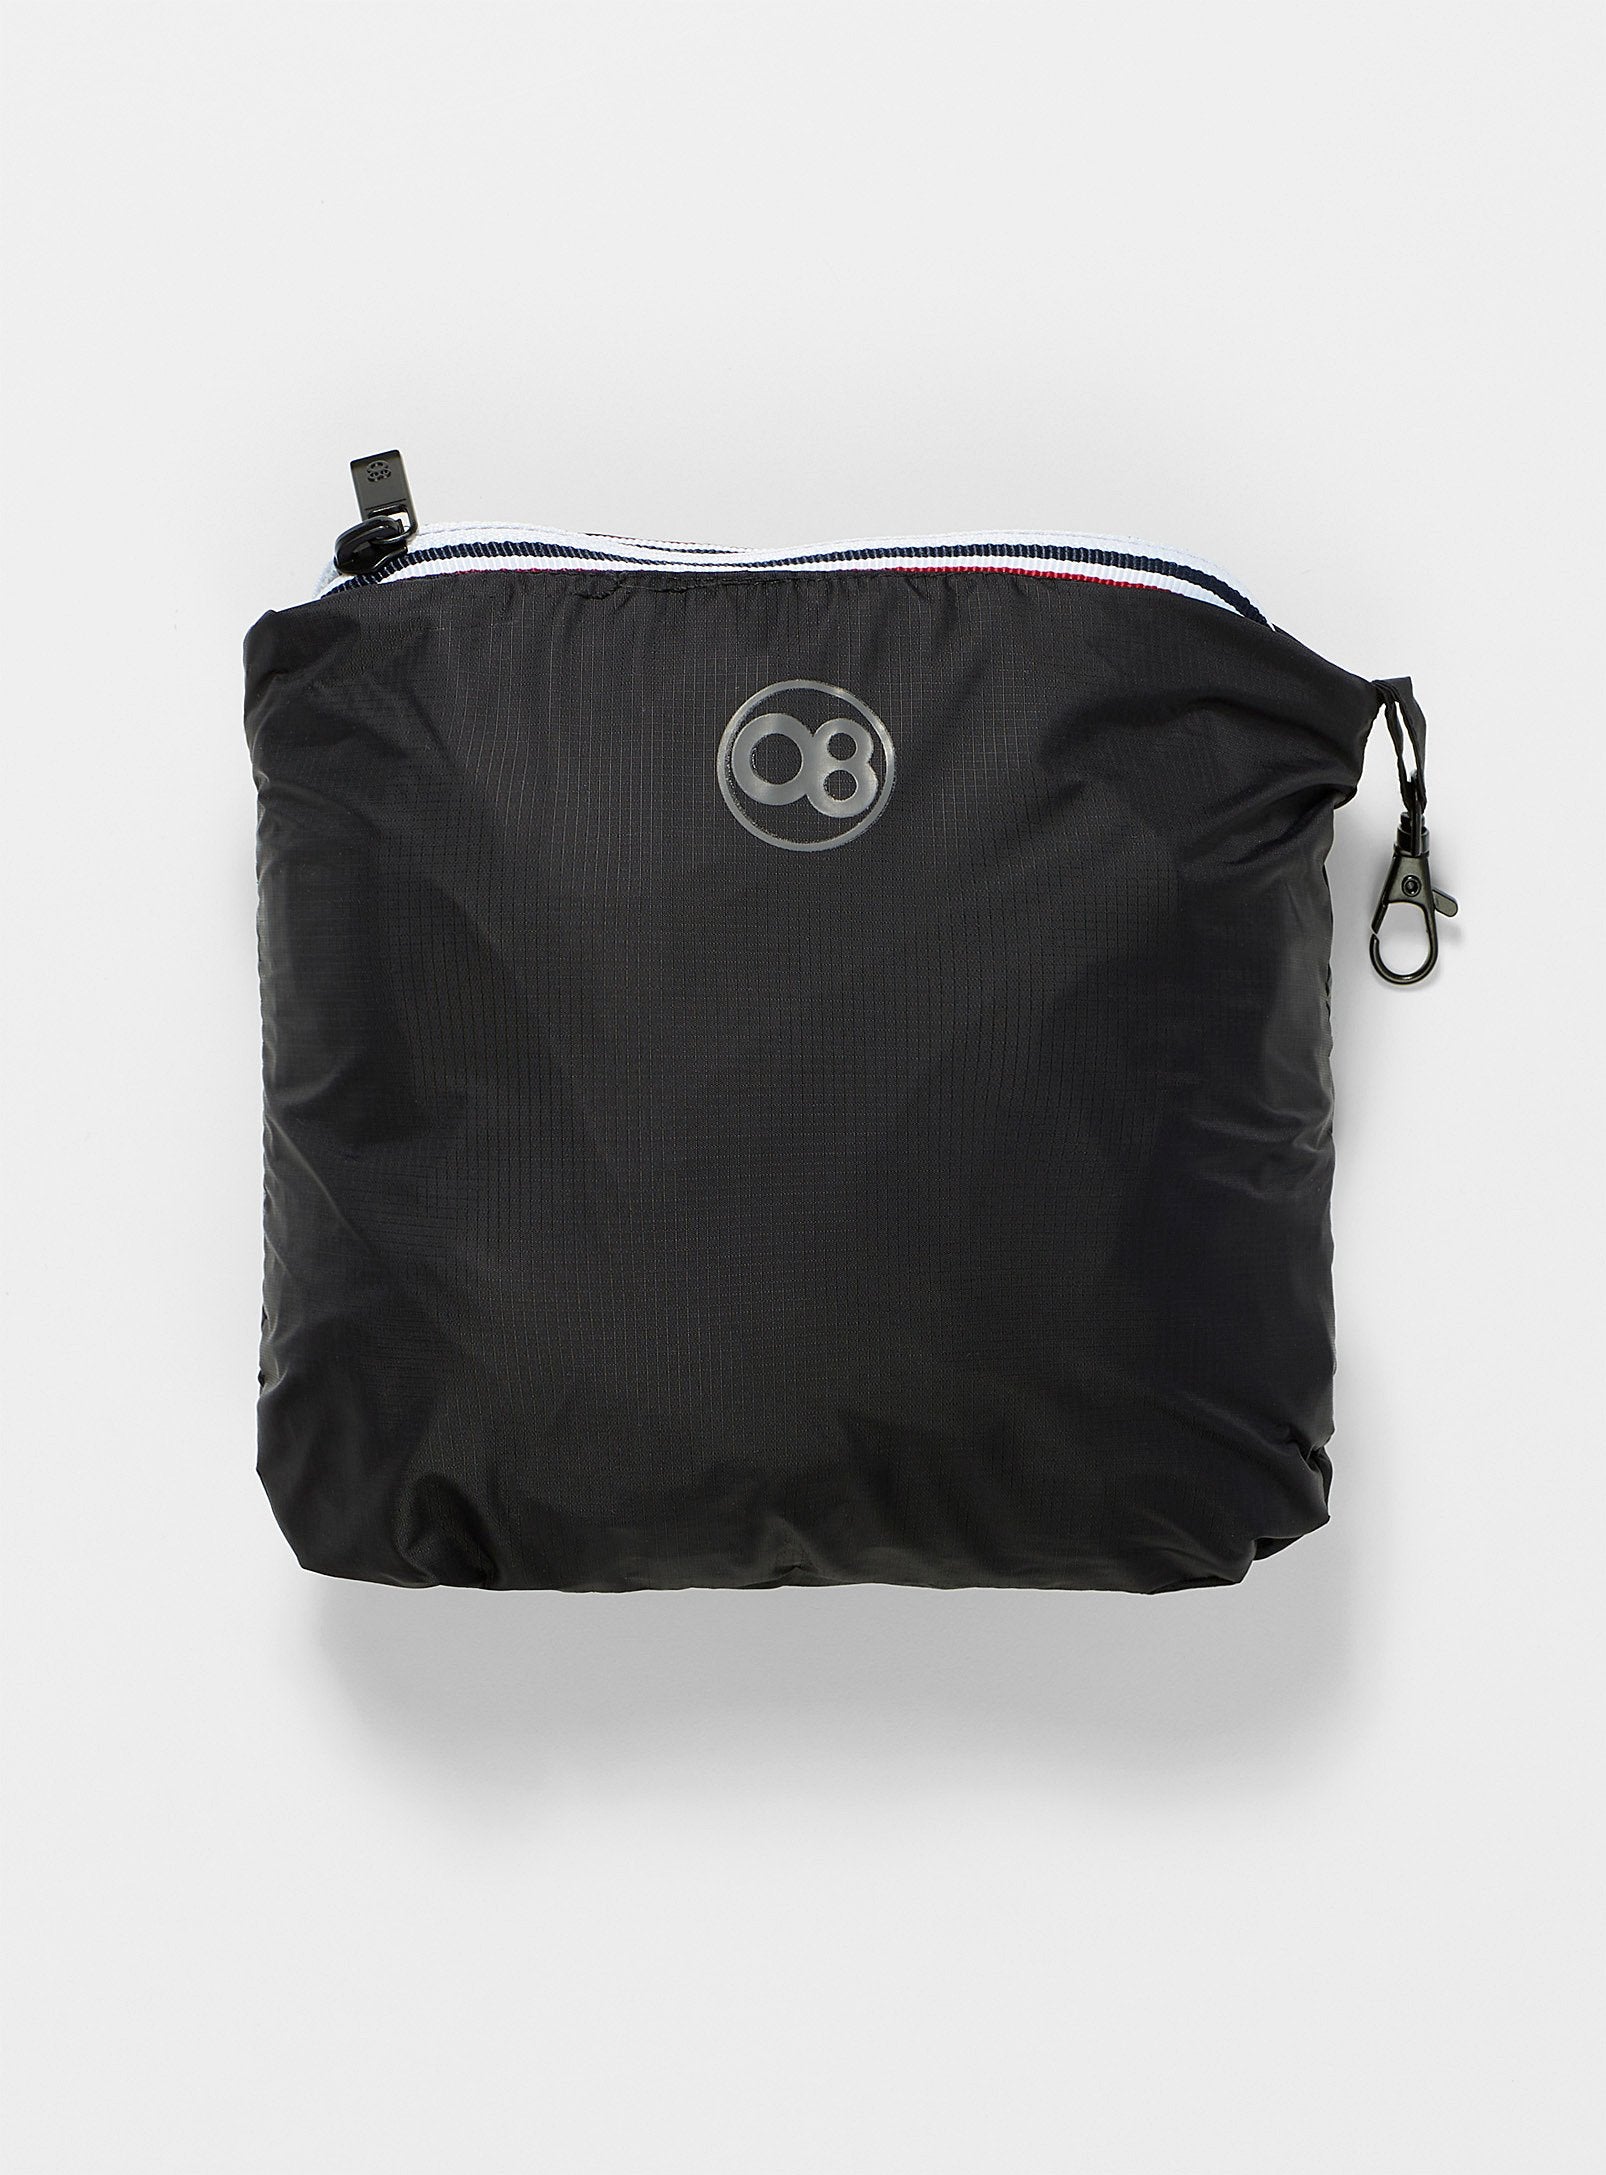 Picture of a Women's Quarter Zip Black Waterproof Rain Jacket bag